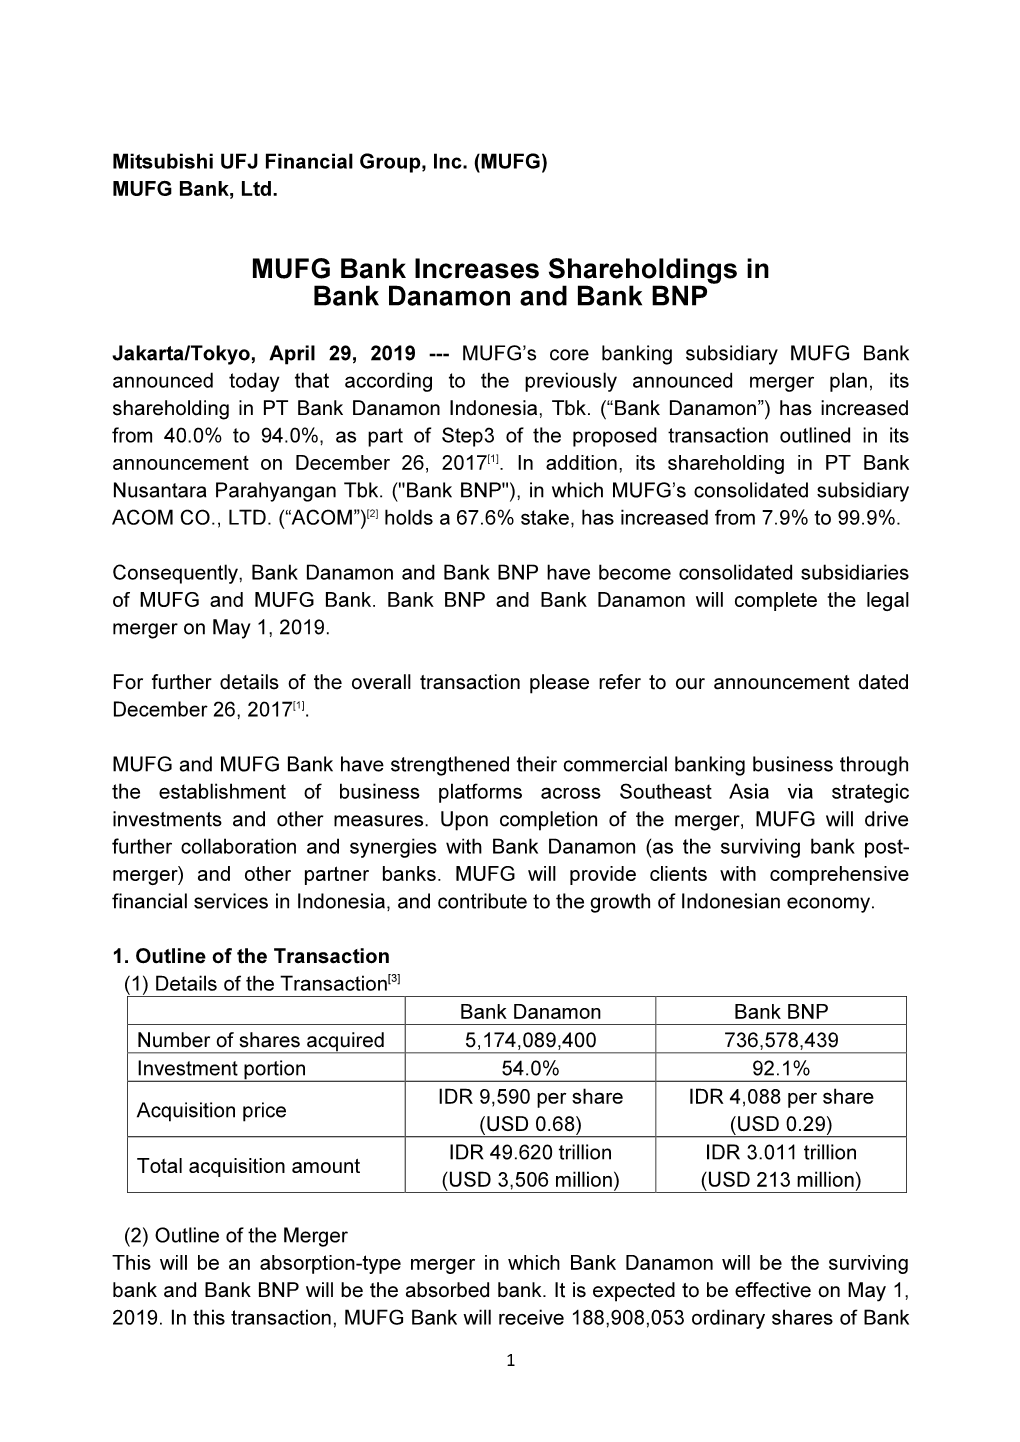 MUFG Bank Increases Shareholdings in Bank Danamon and Bank BNP